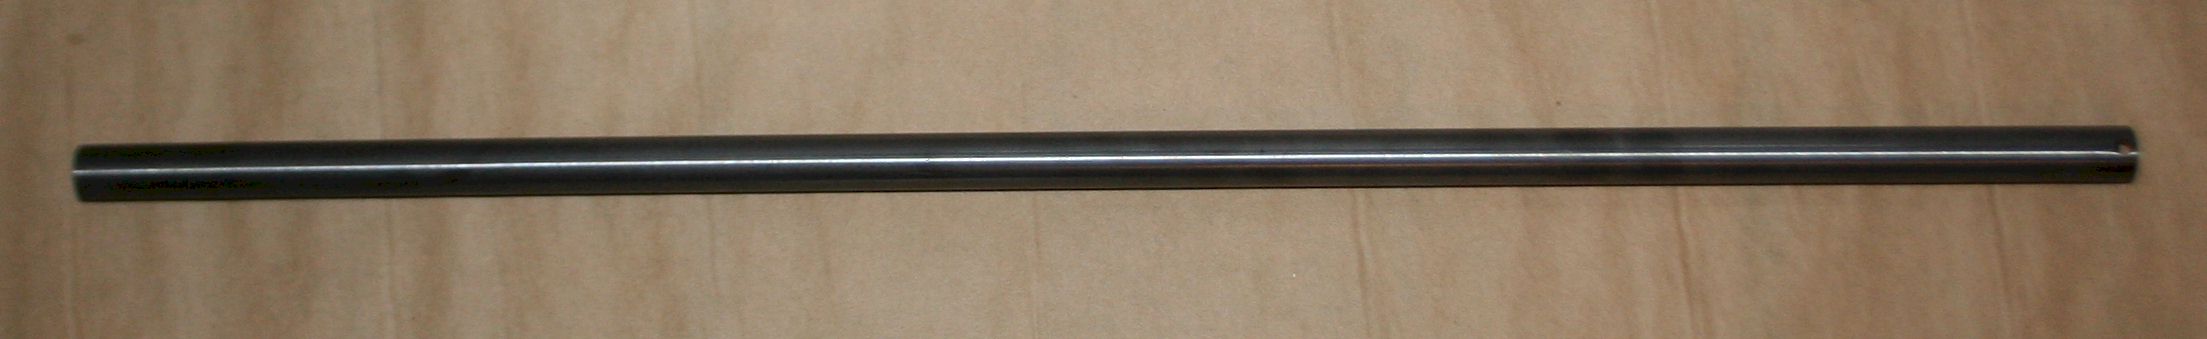 Magazine tube - Winchester Rifle 25 1/4 pre 64 Large cal 1892, 1894, 1866, 1873, Marlin ORIGINAL